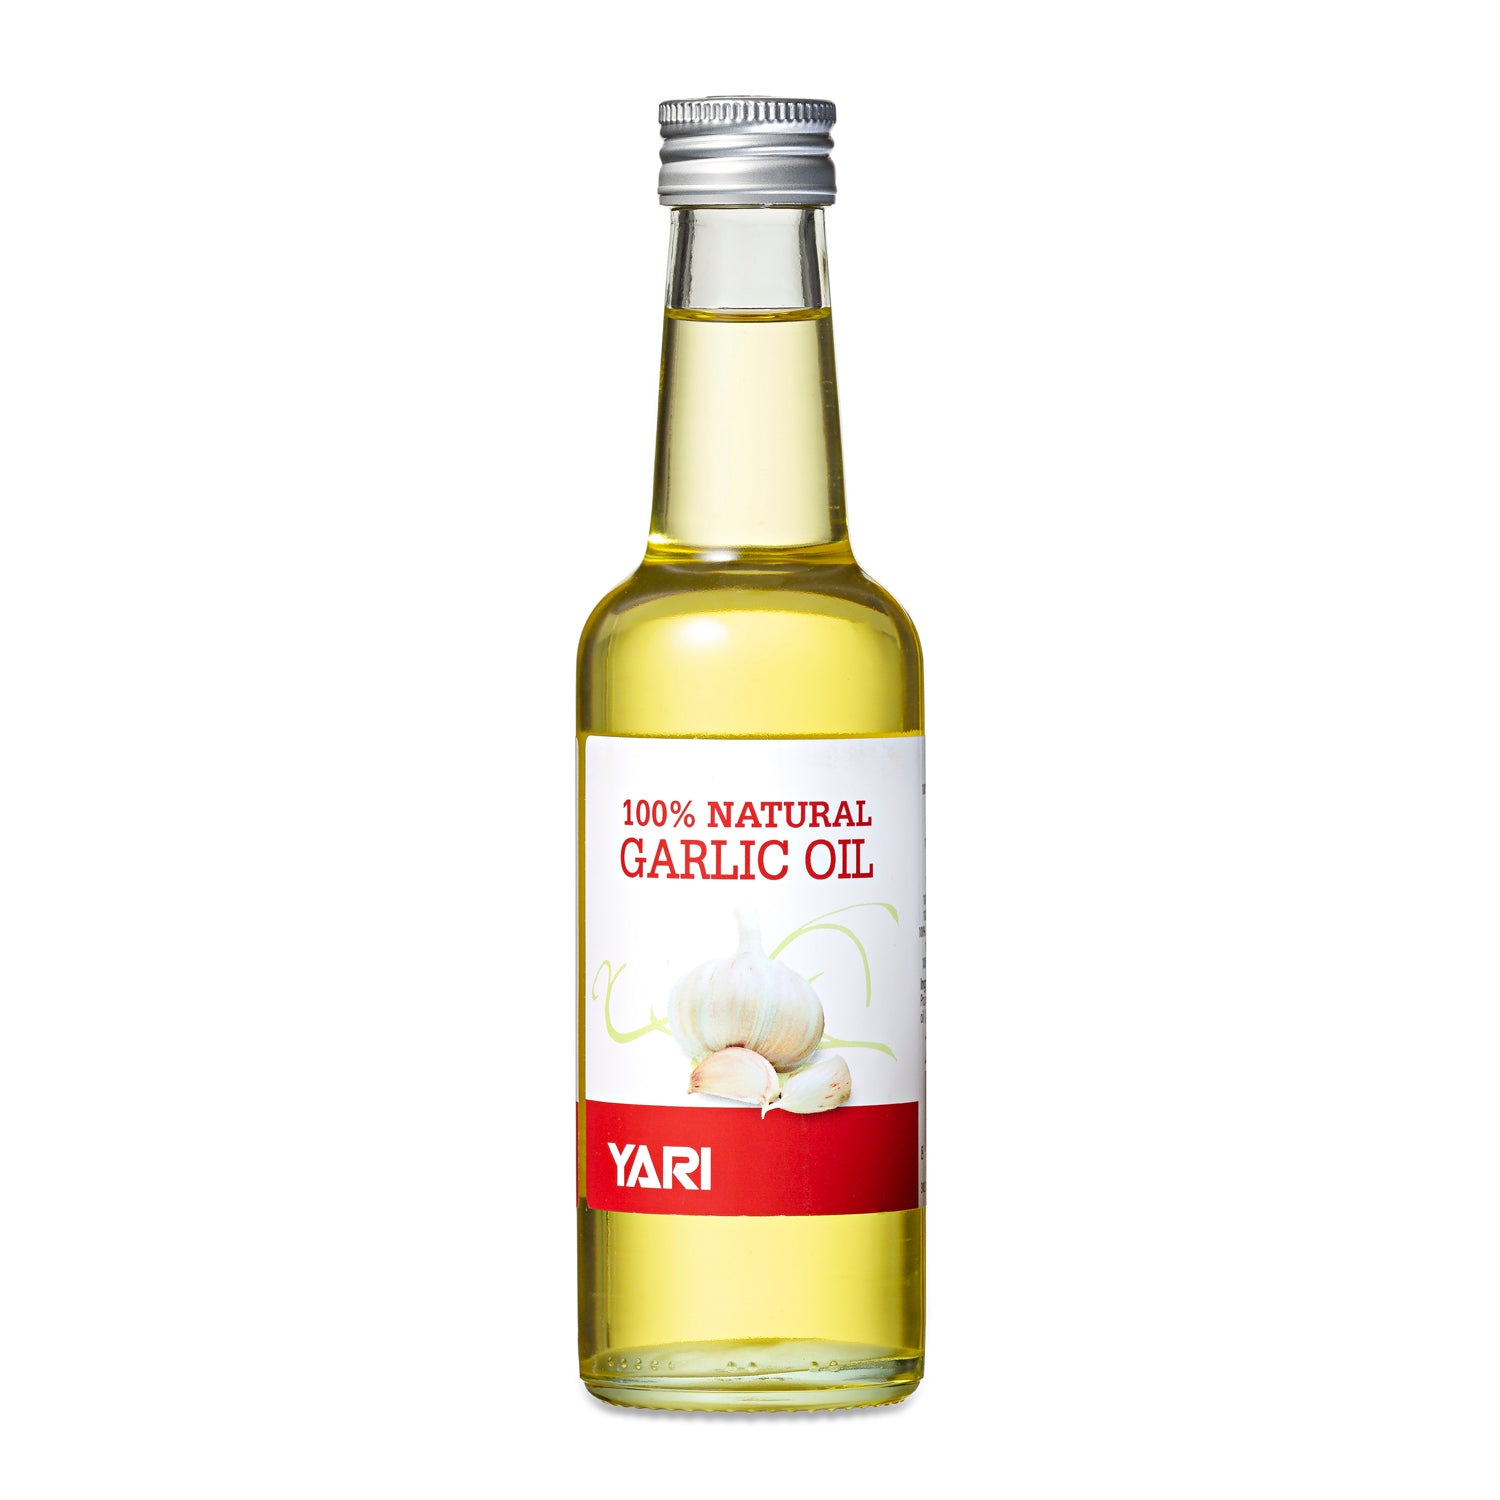 Yari - 100% Natural Garlic Oil 250ml